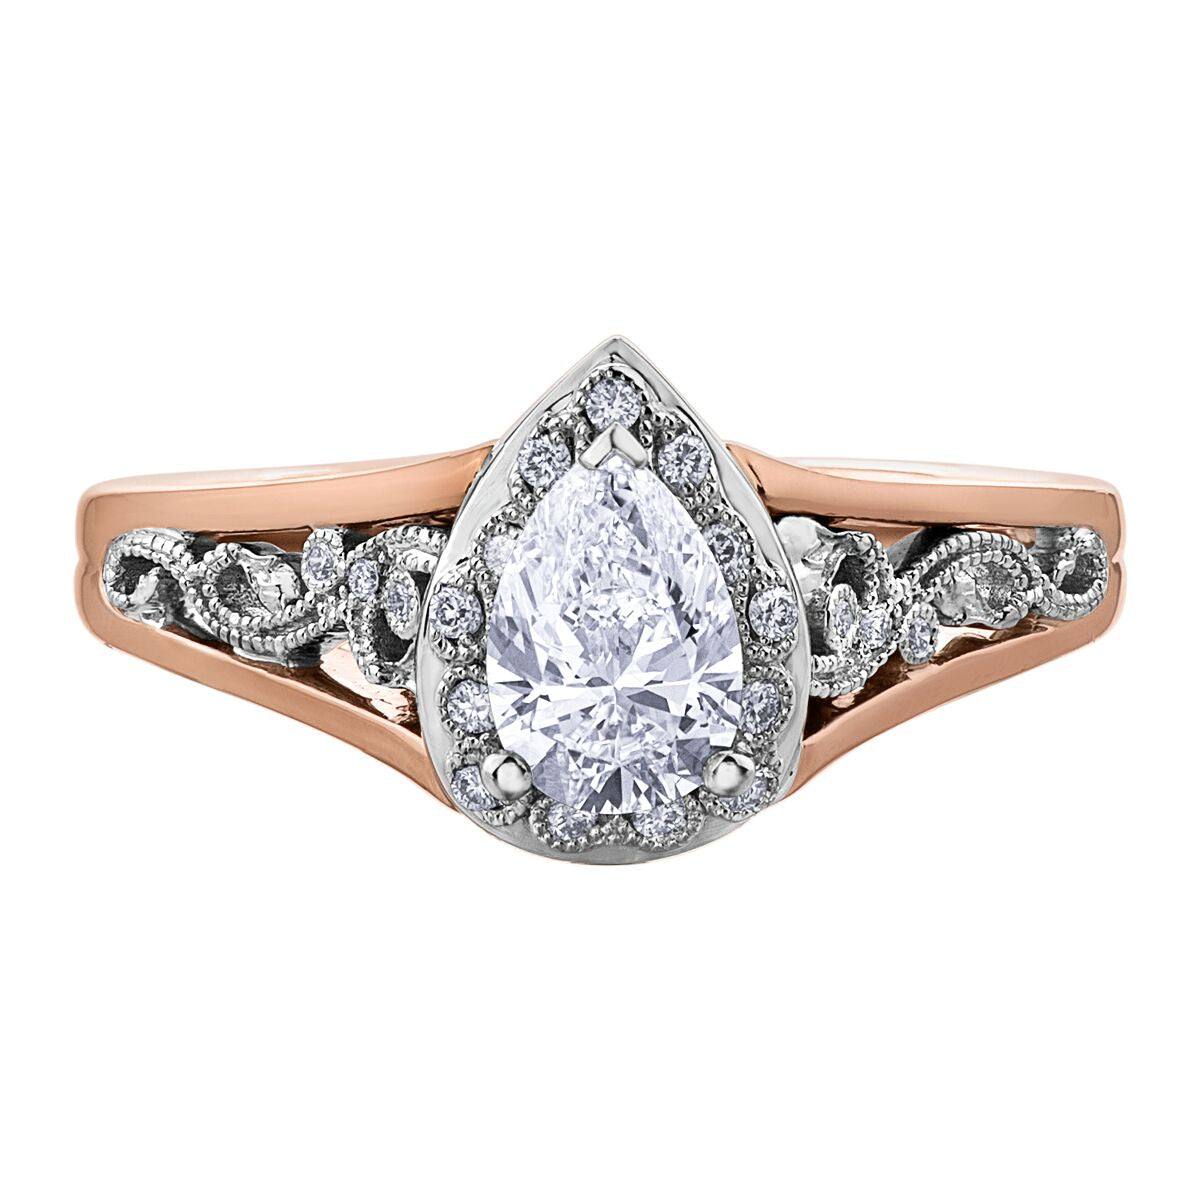 Patek Philippe Calatrava Cross ring in 18k white gold with round brilliant  cut diamonds. | AHEE Jewelers